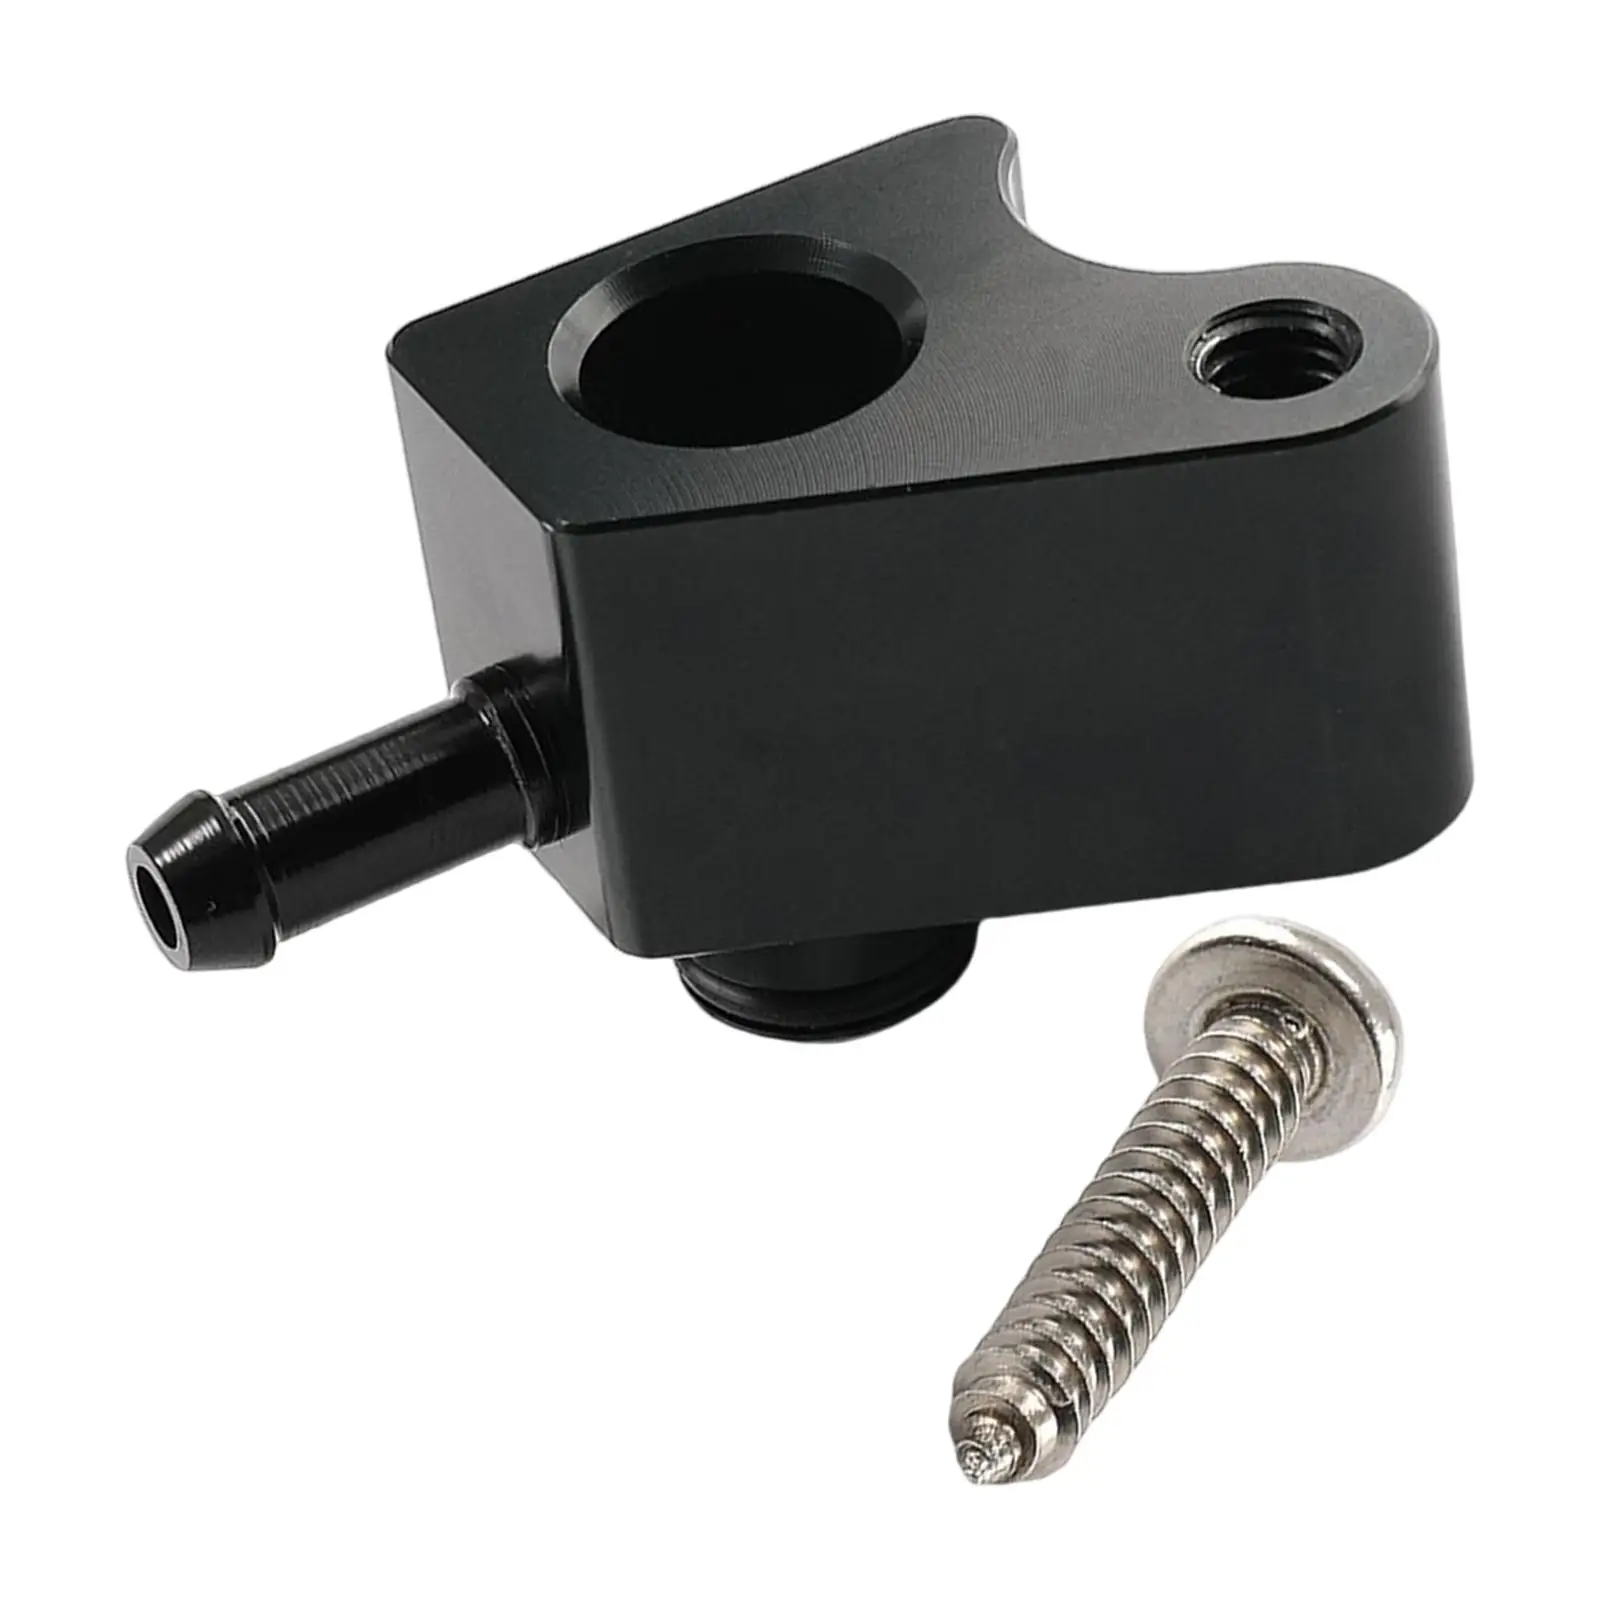  Adapter CNC  Accessories BlackTurbochargers   2.0T Engines ,Vehicle Parts, Car Supplies